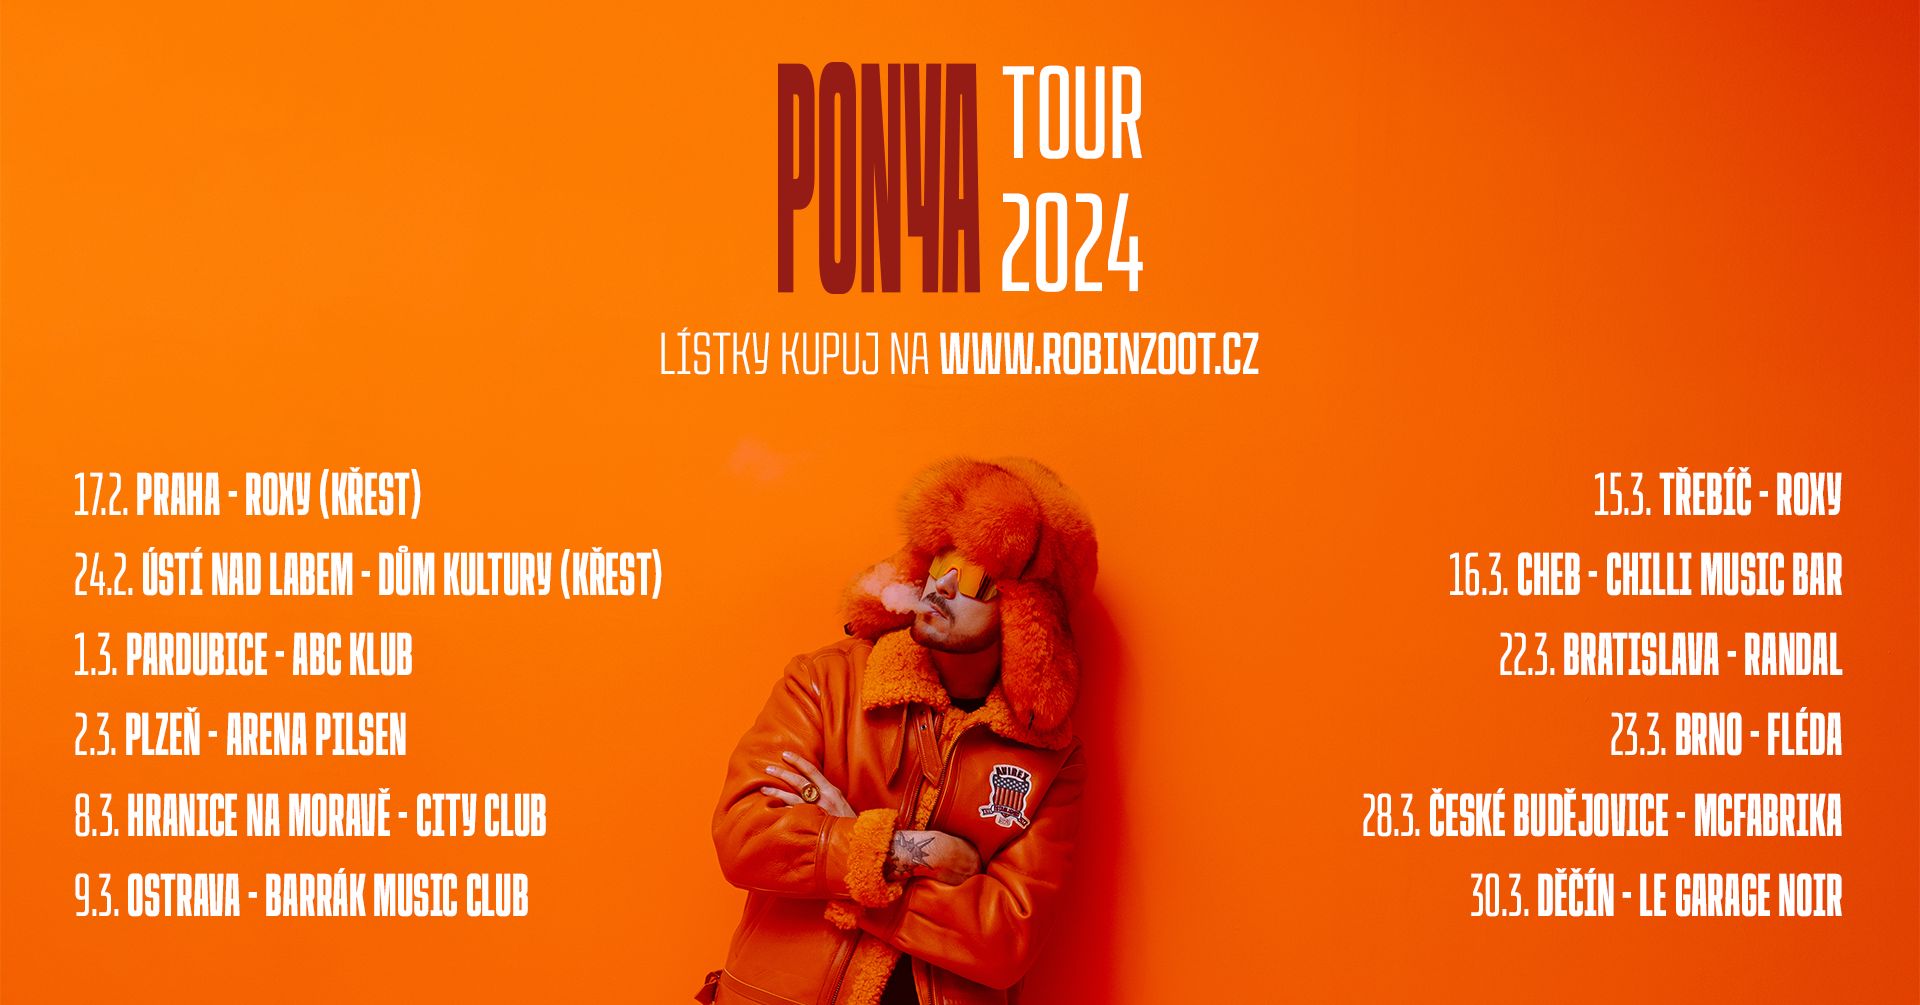 Robin Zoot – Ponya Tour // Roxy Club Třebíč